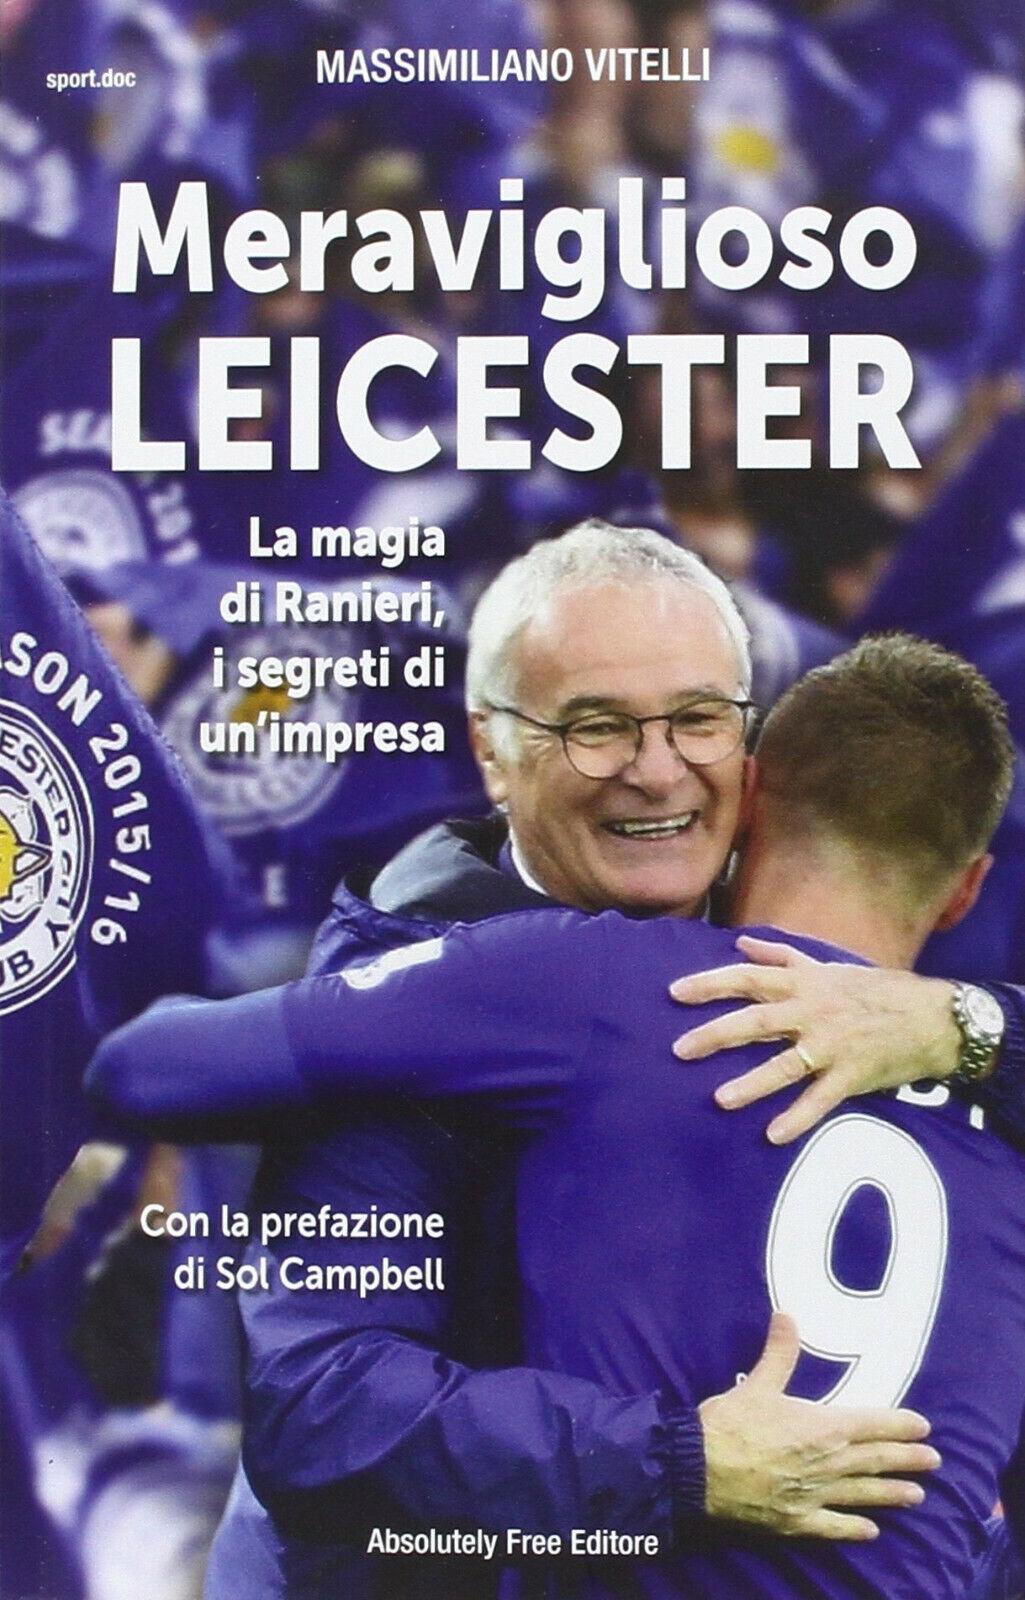 Meraviglioso Leicester - Massimiliano Vitelli - 2016